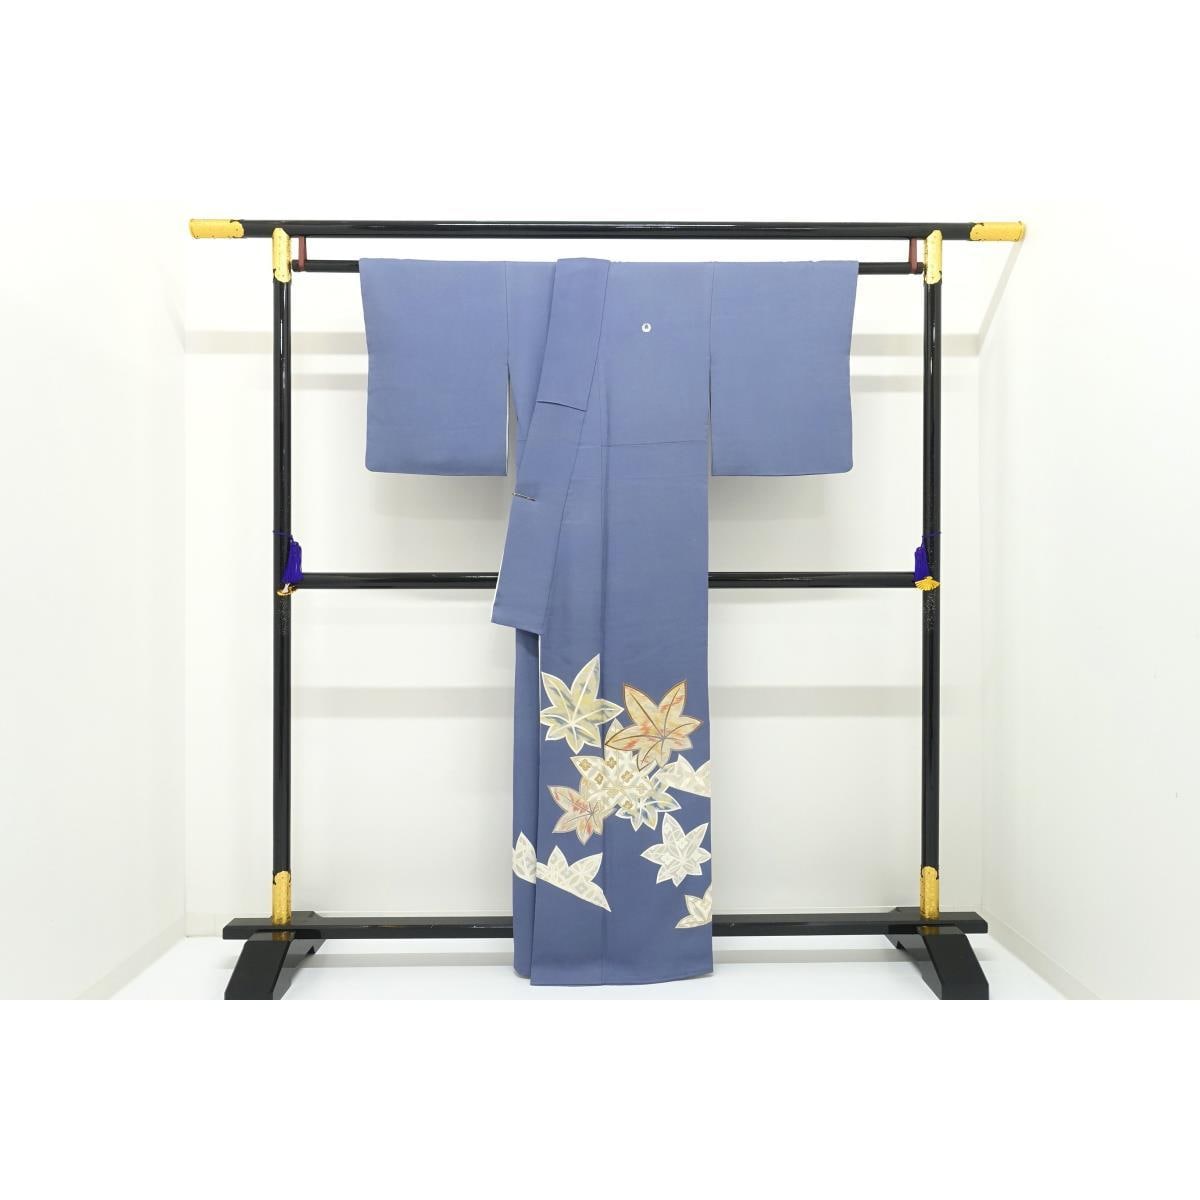 Iro-Tiso Chiso Agari 紫藤 連衣裙長度 S 尺寸